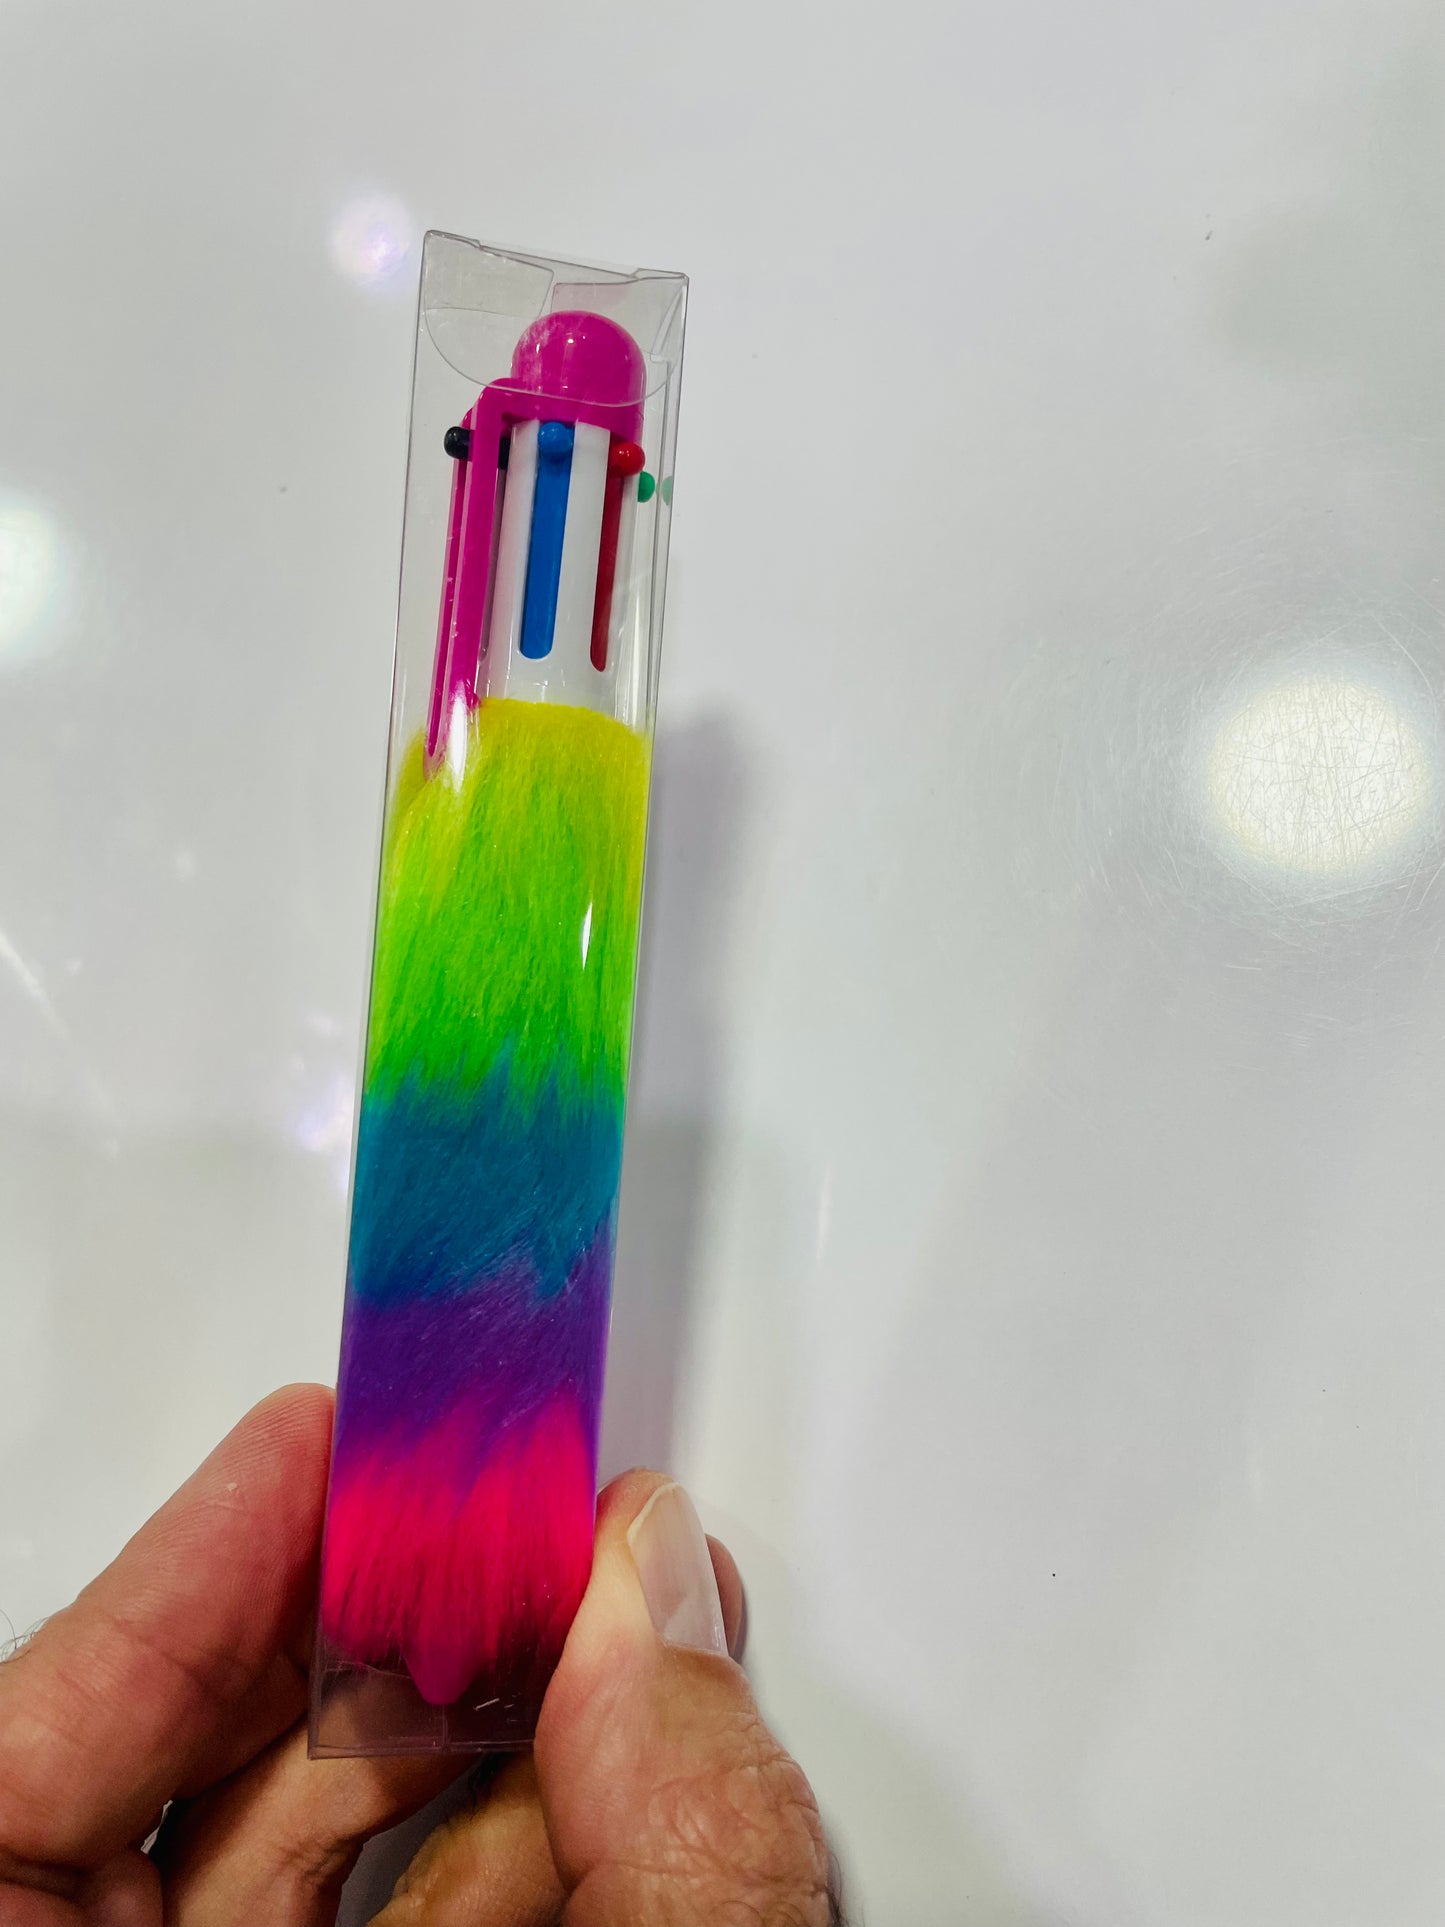 6-Color Rainbow Design Pom Pom Pen Funny Fluffy Pens Rainbow Pen - Cute Fluffy Pen